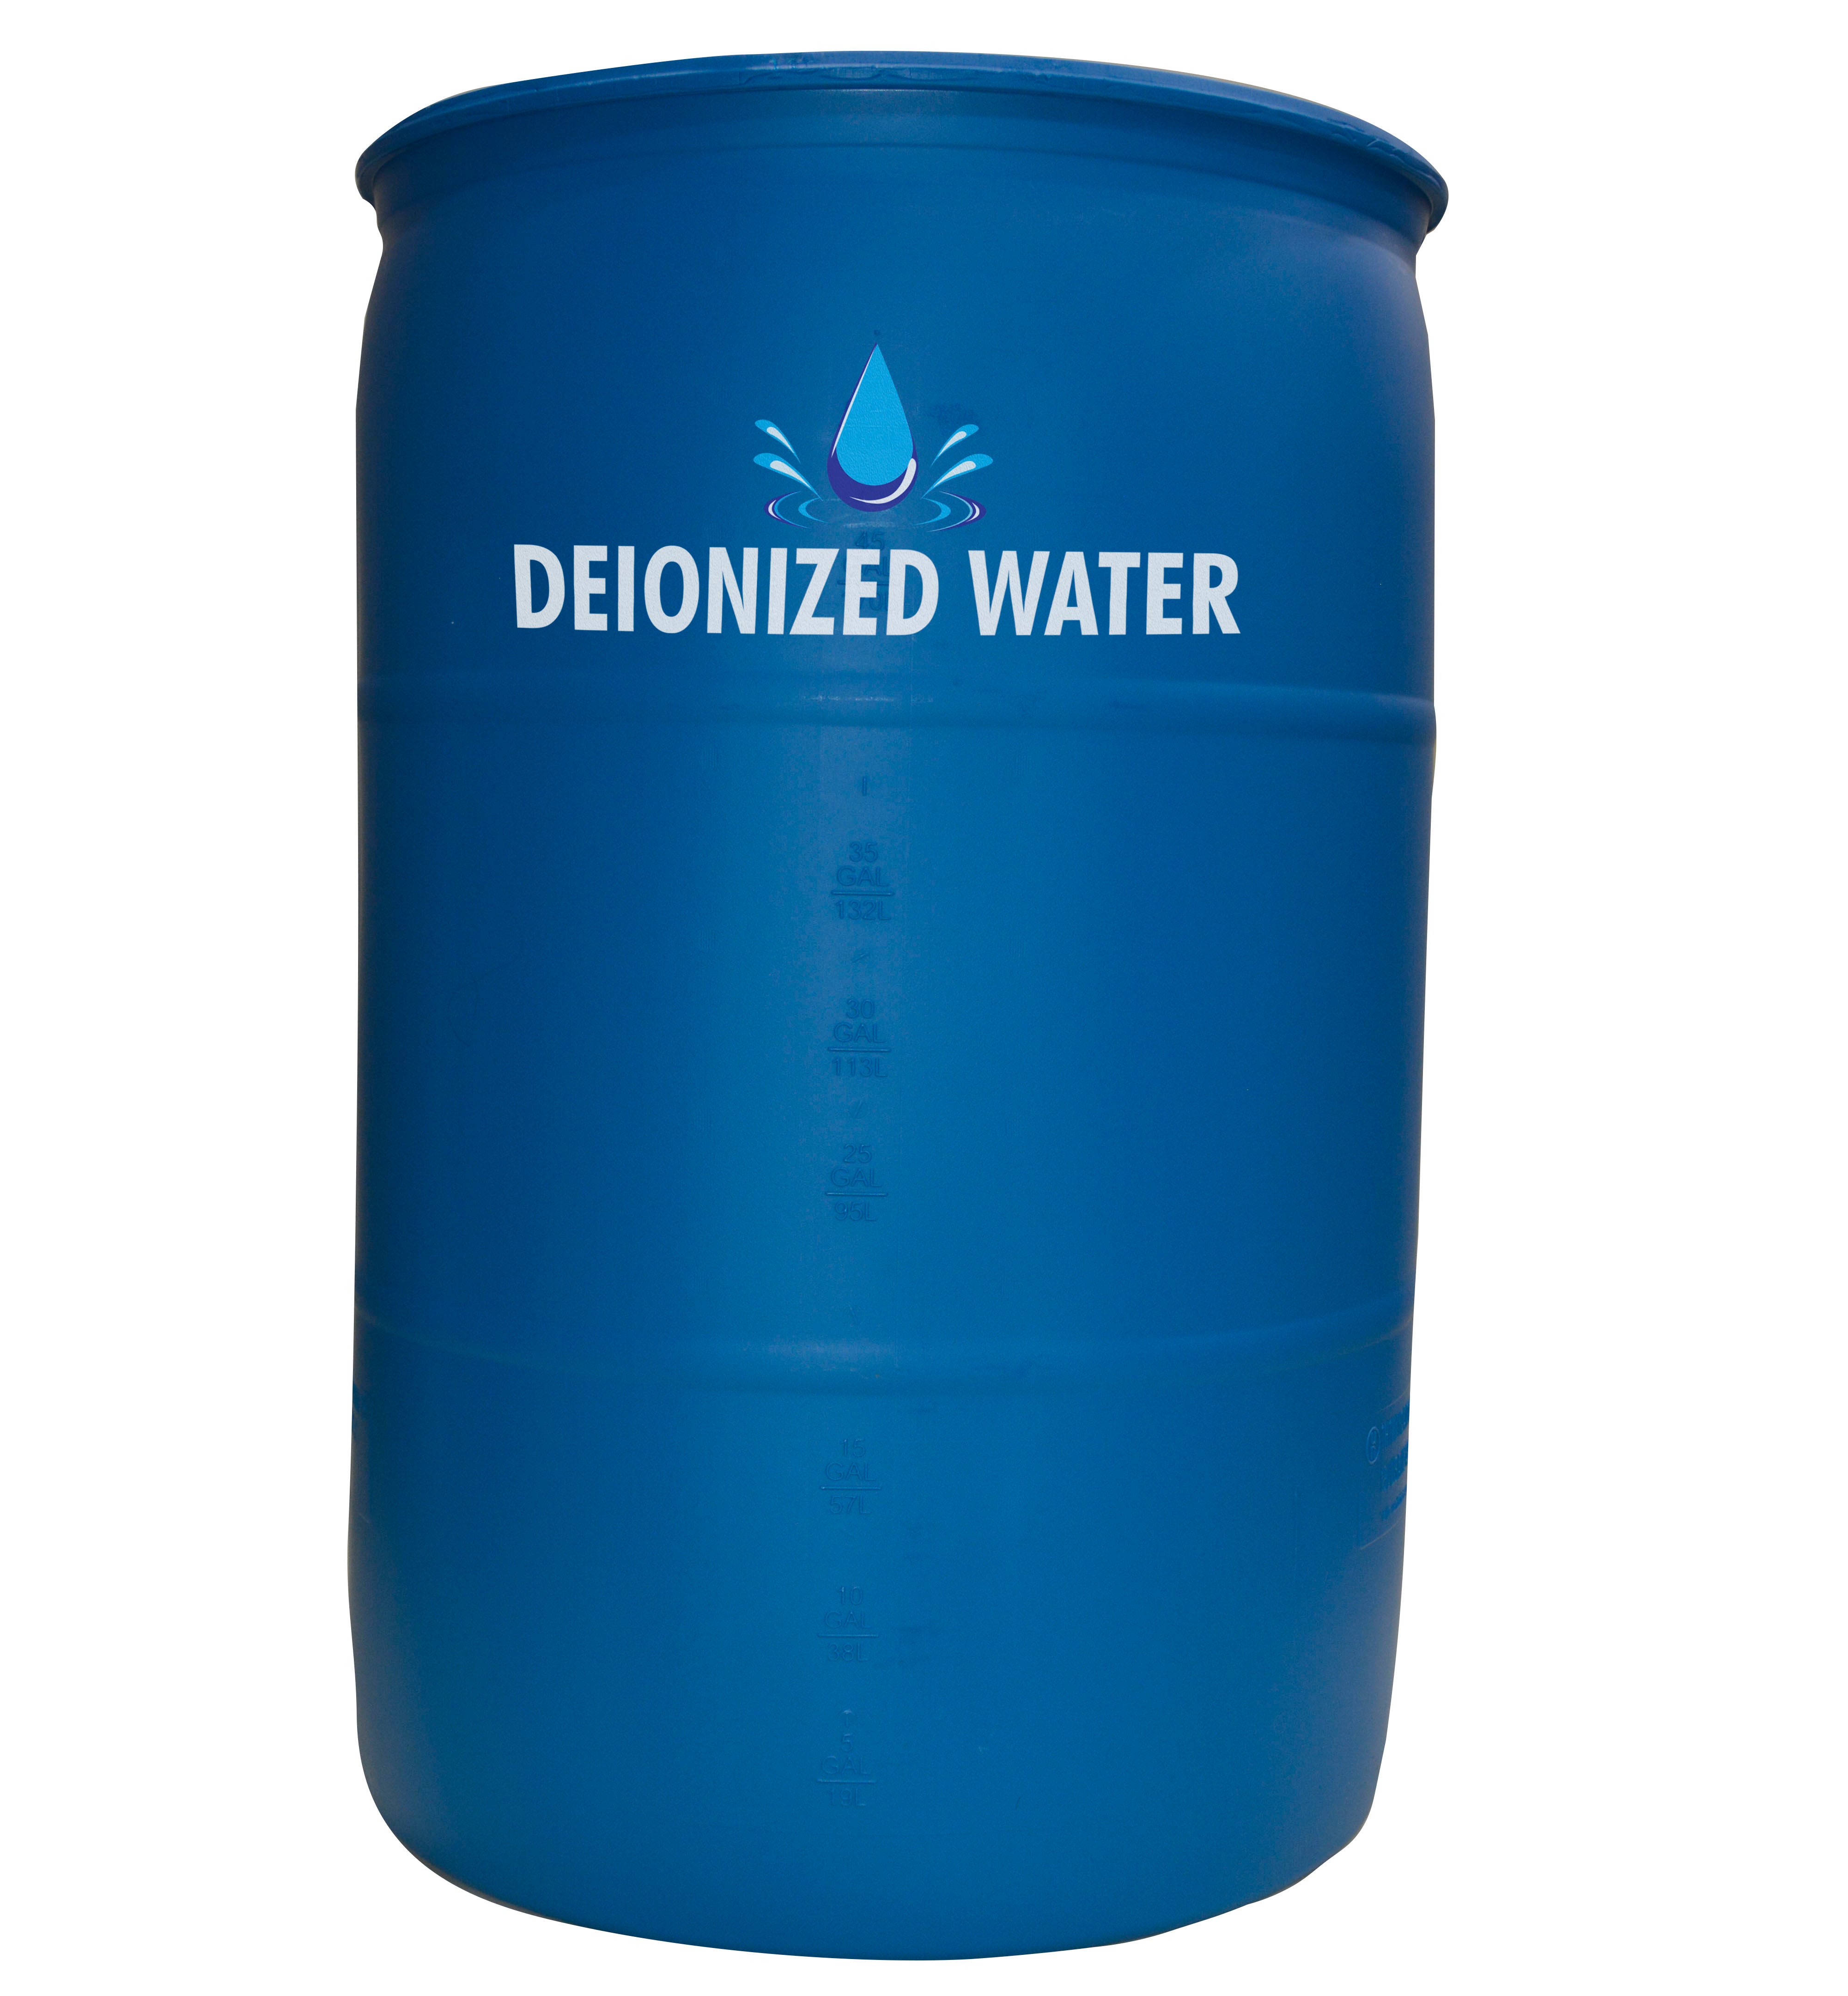 Deionized Water (1 Gallon)